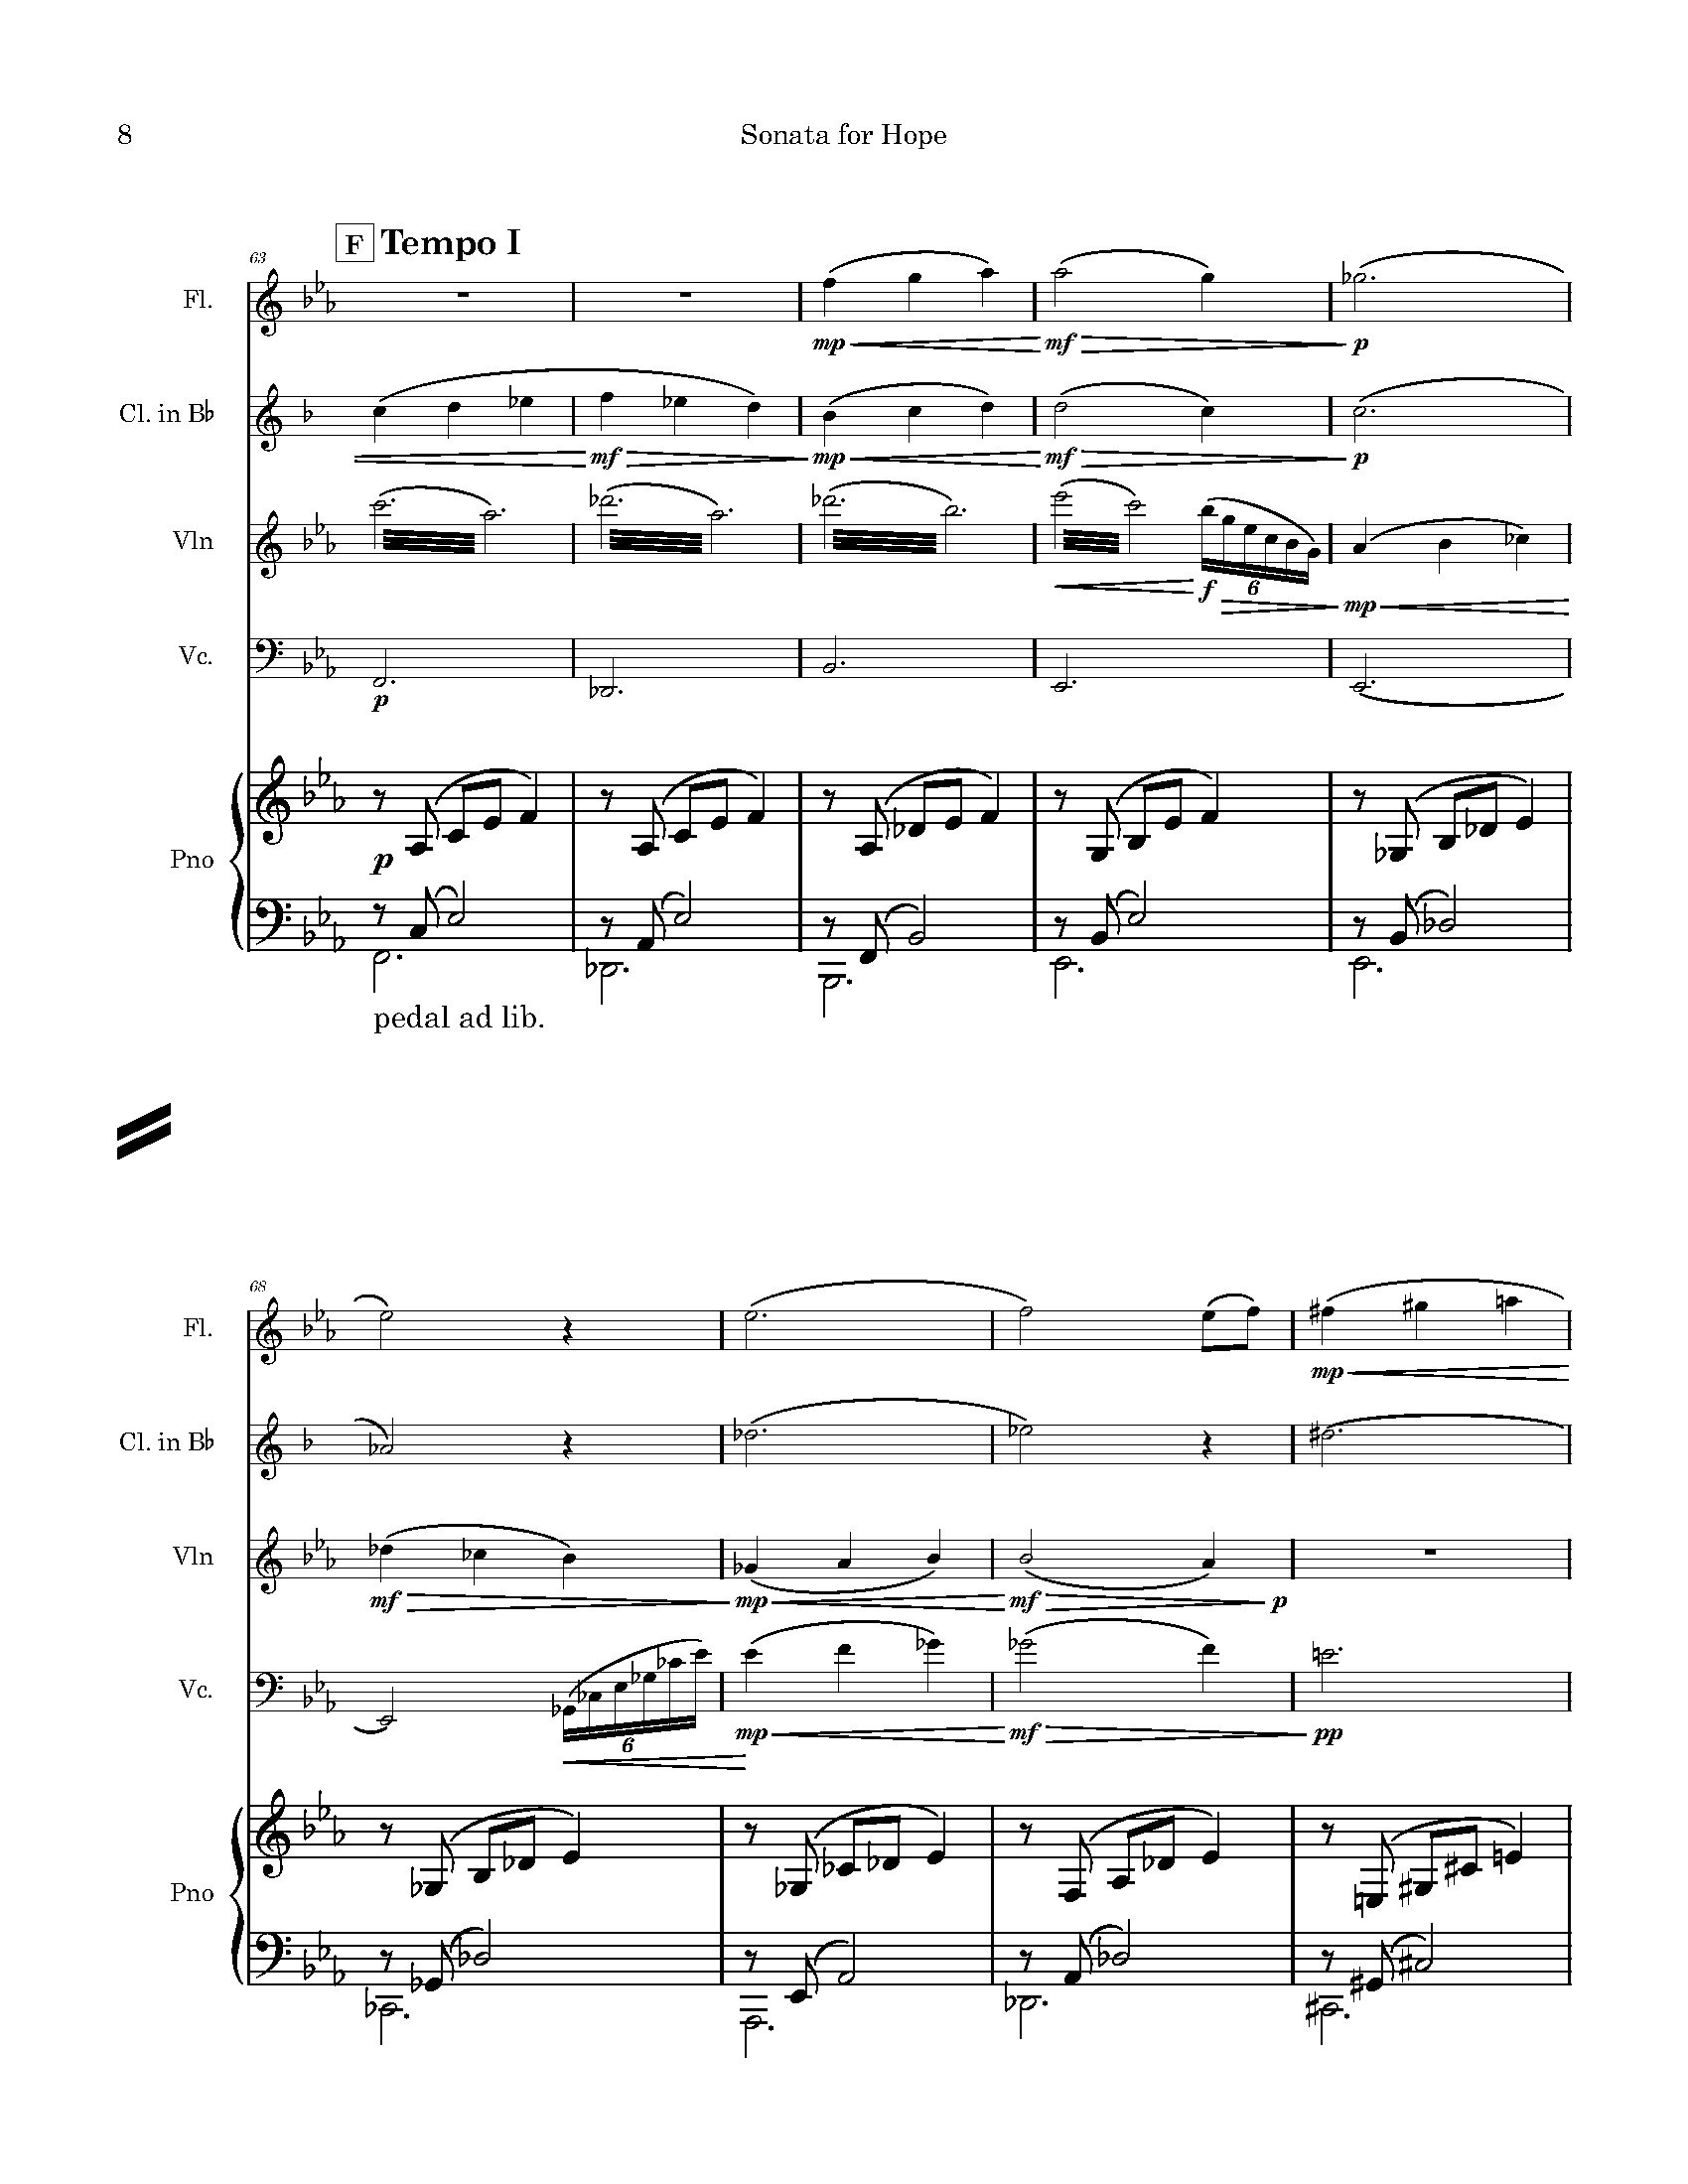 Sonata for Hope - Piano Score_Page_08.jpg